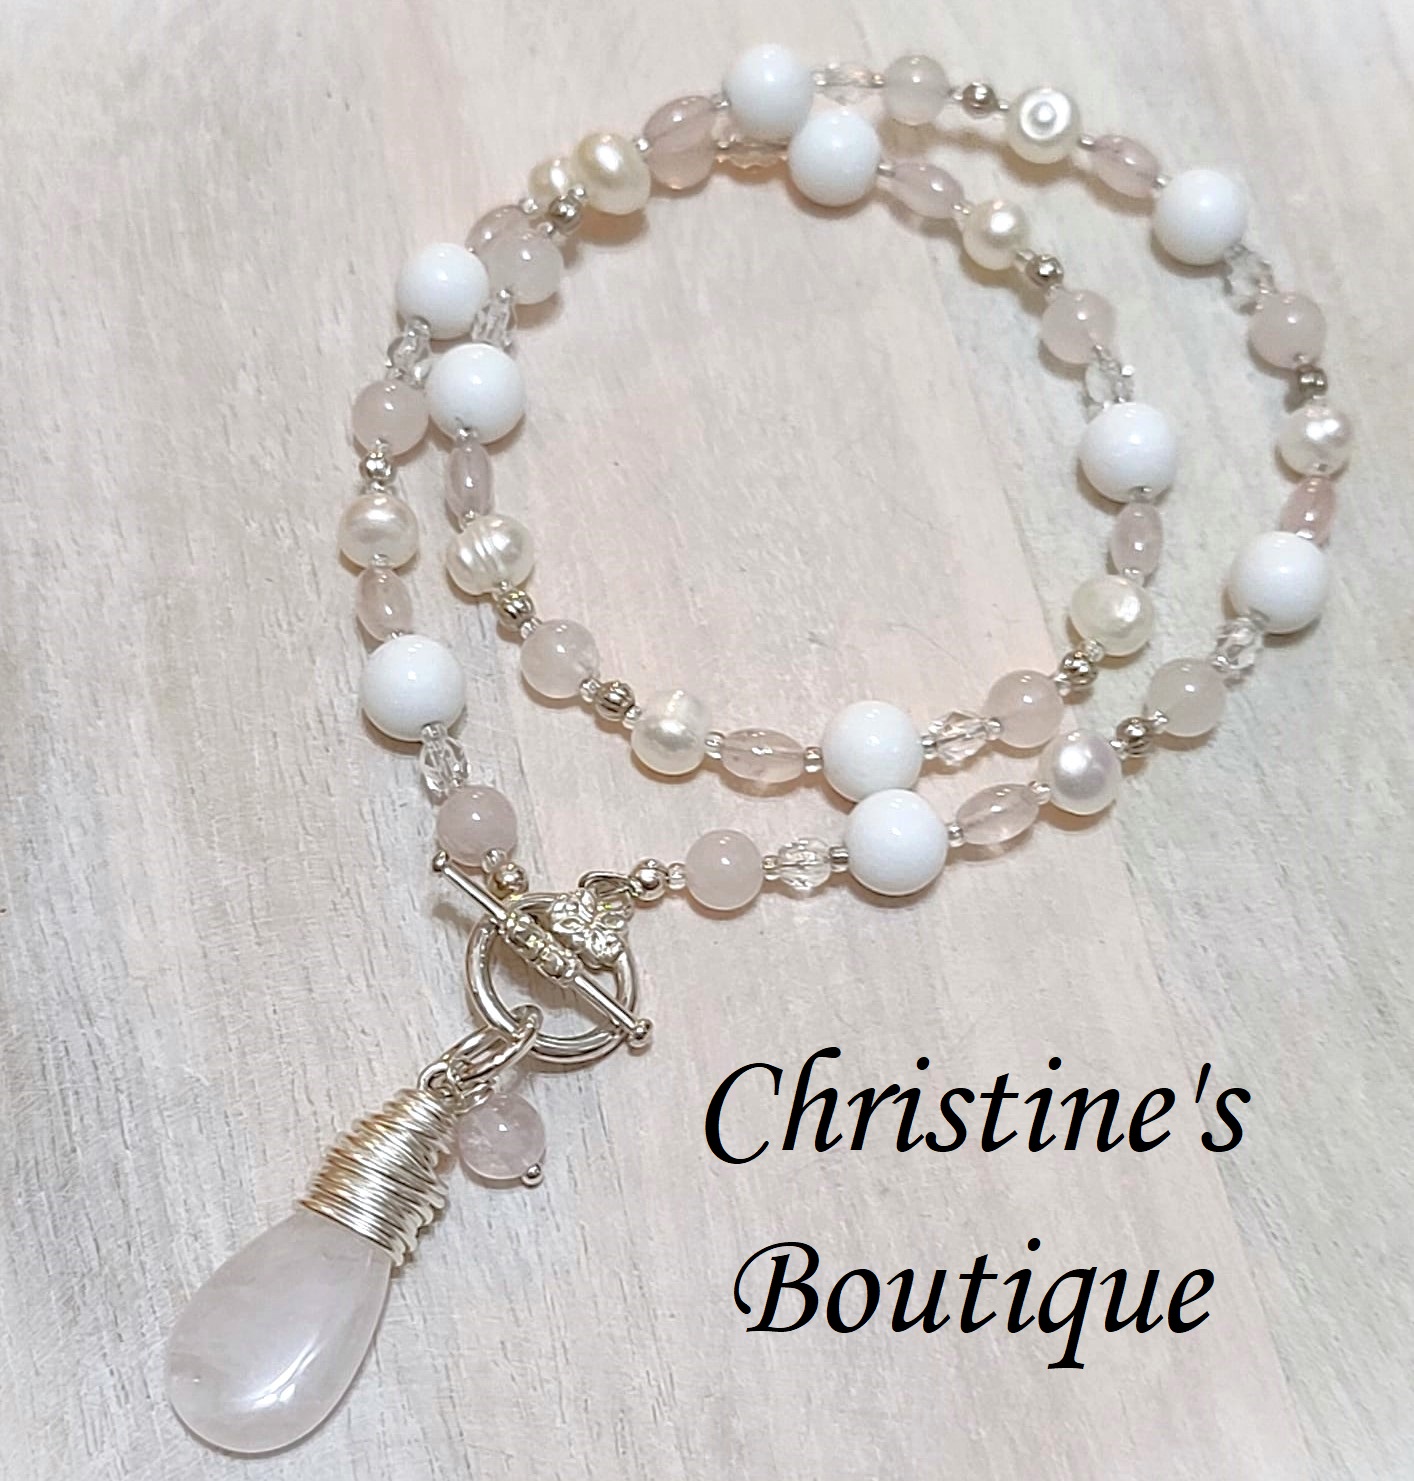 Gemstone lariat necklace, pink quartz, howlite and crystal